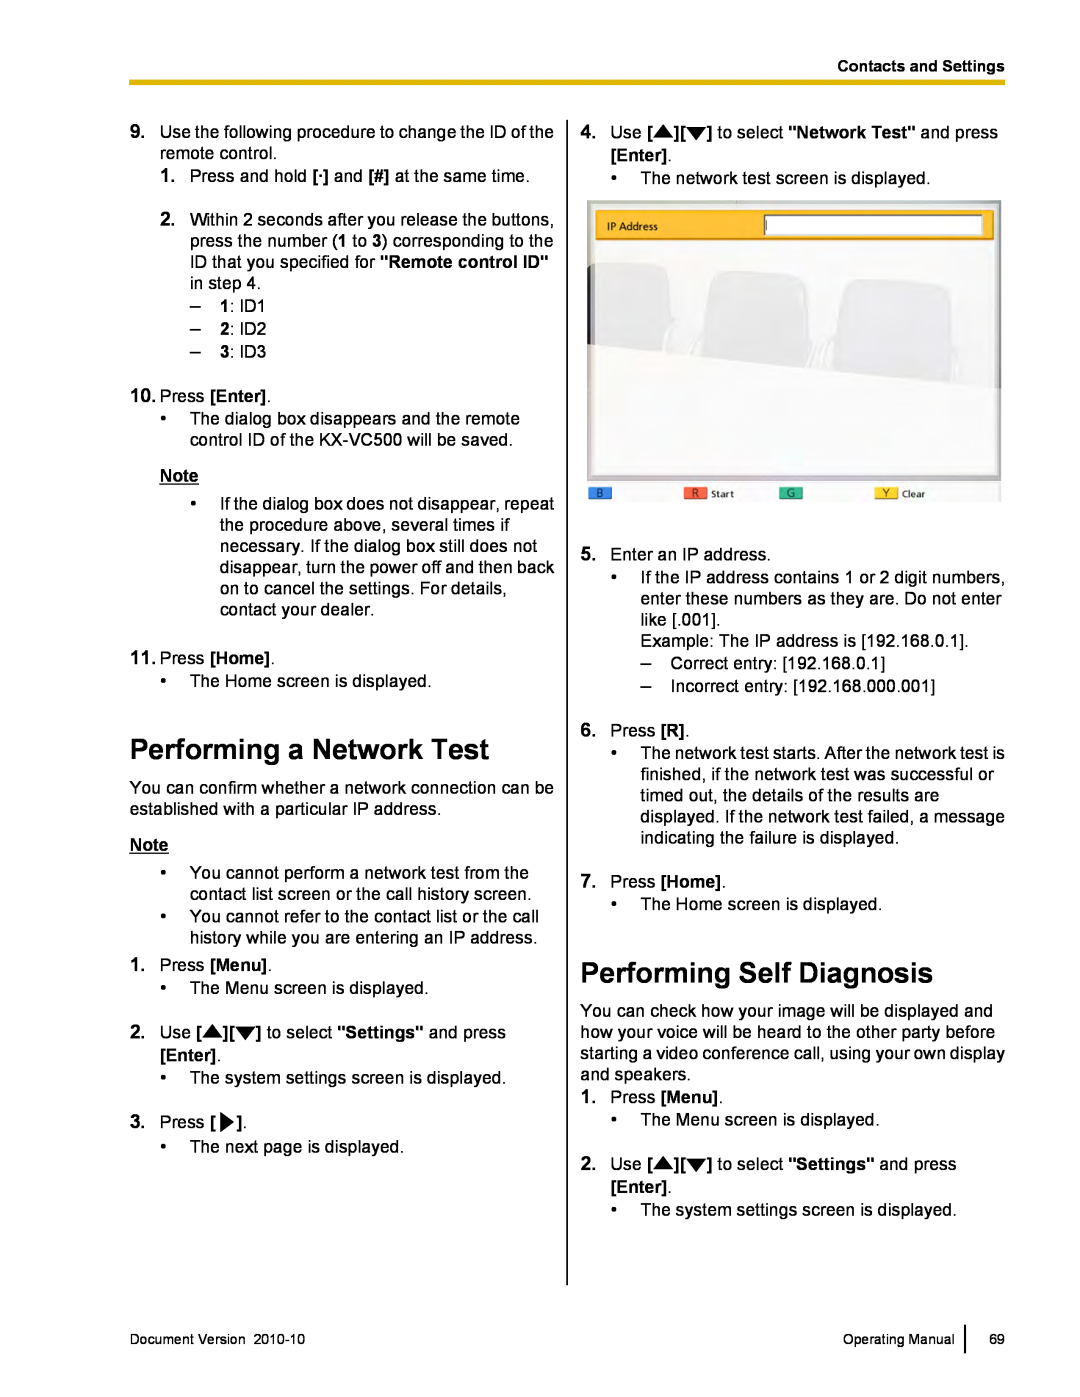 Panasonic KX-VC500 manual Performing a Network Test, Performing Self Diagnosis 